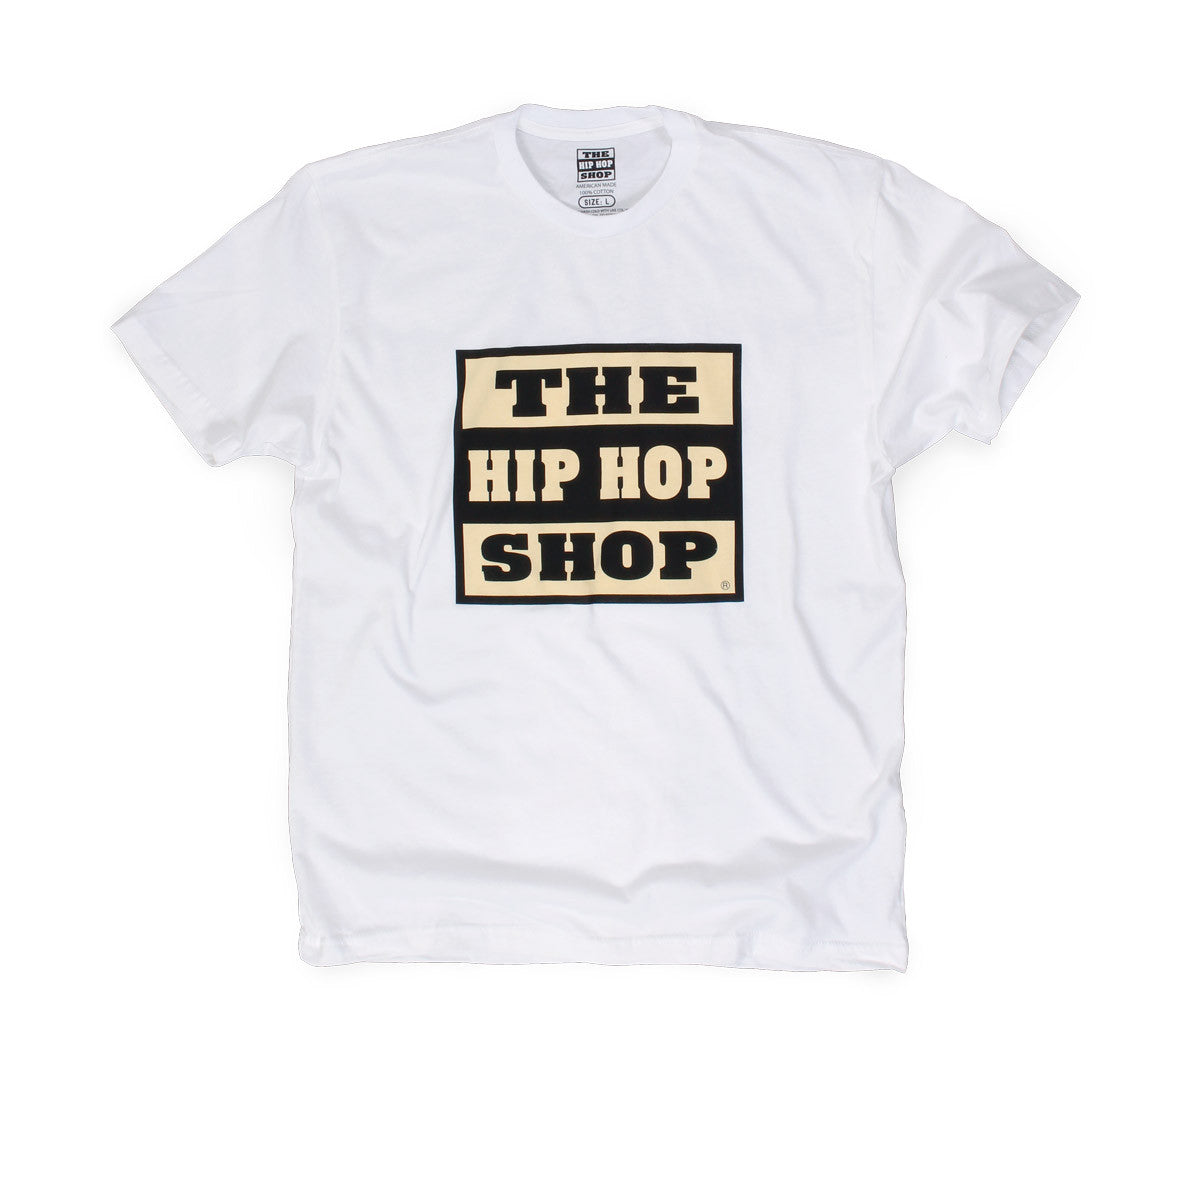 The Hip Hop Shop white logo t-shirt